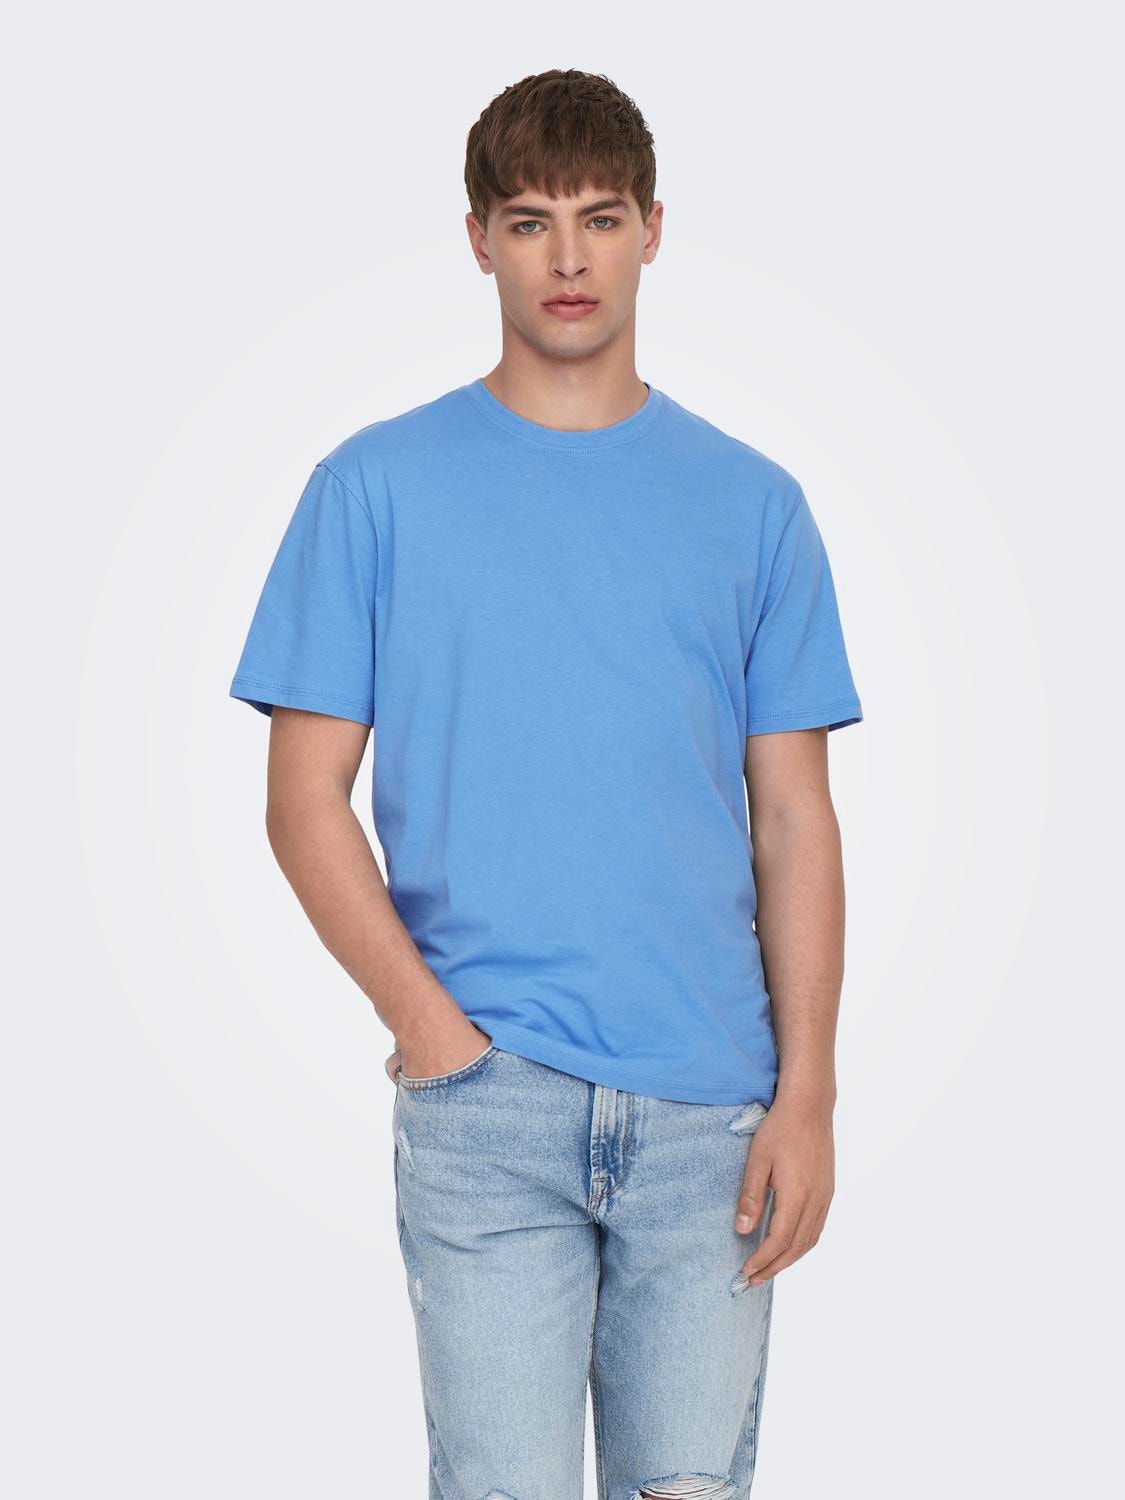 O-neck t-shirt | Light Blue | ONLY & SONS®